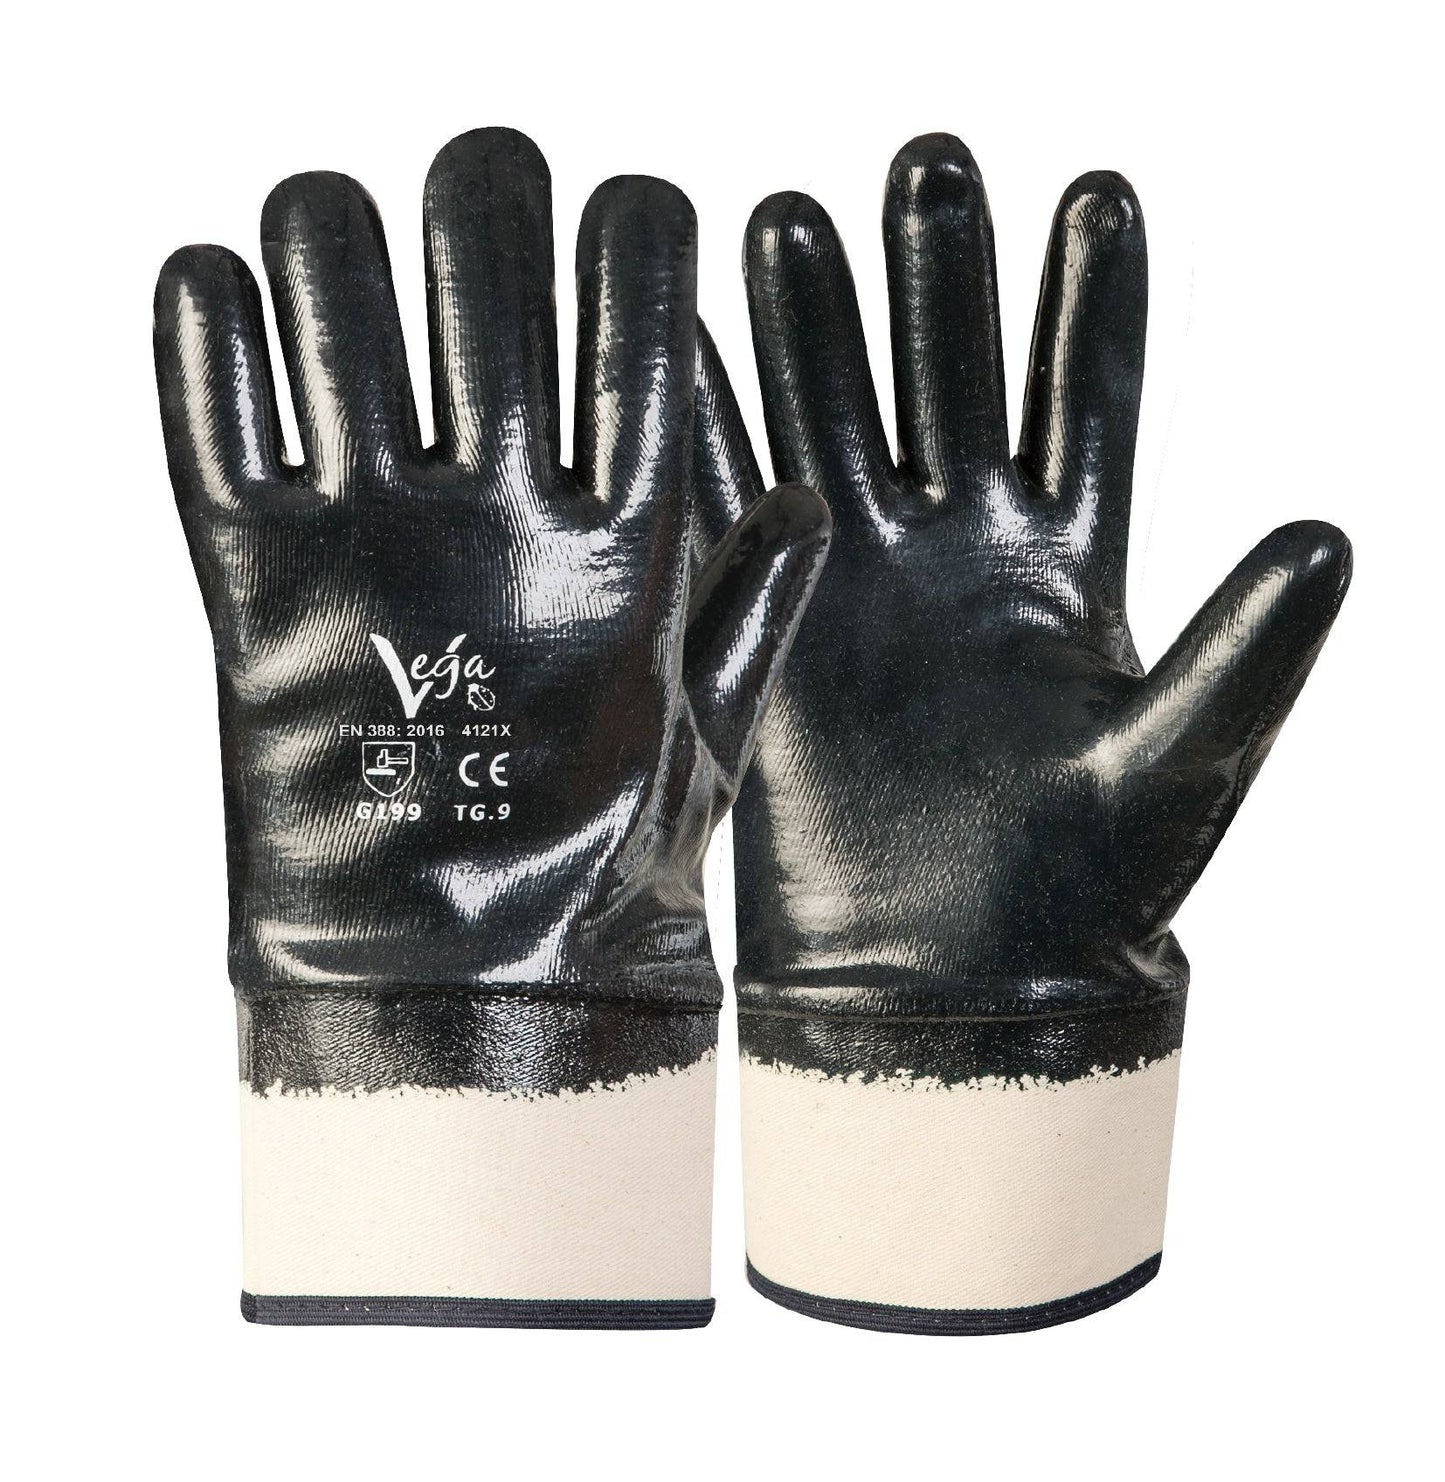 Spread work gloves NBR VEGA art. G199 CE CN388 size 10